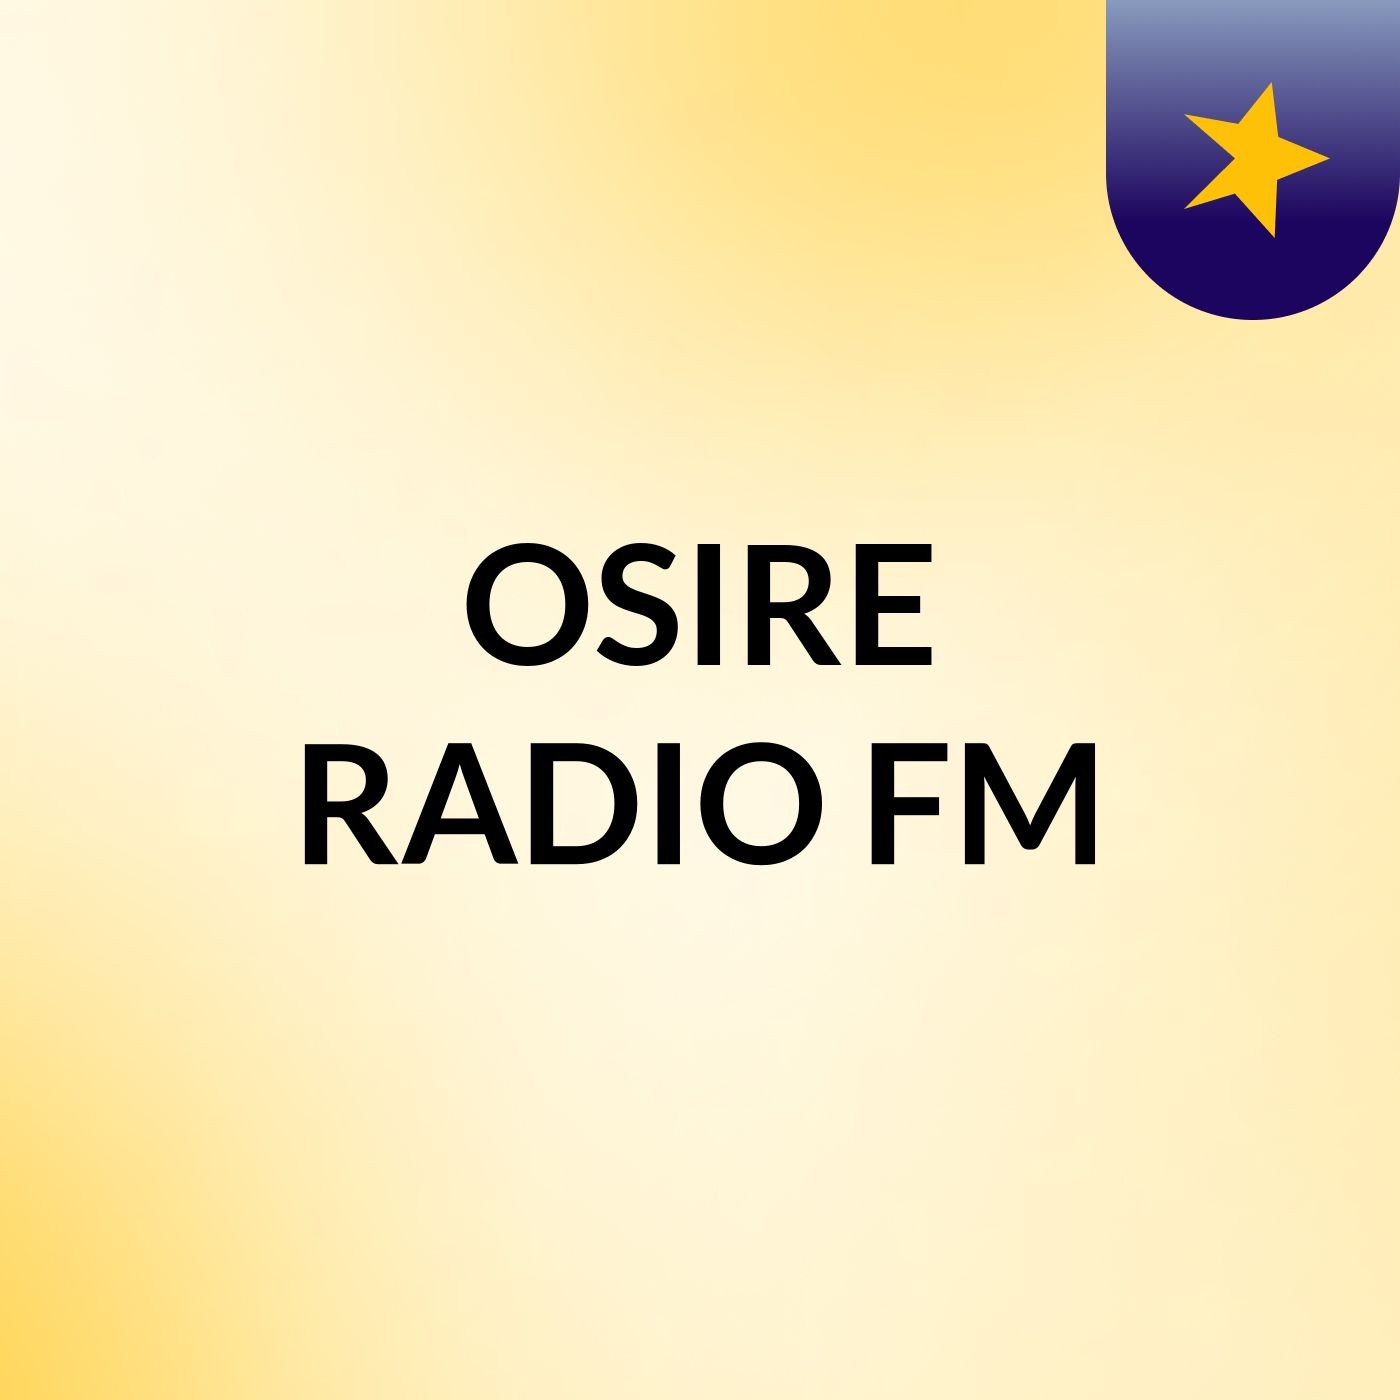 OSIRE RADIO FM